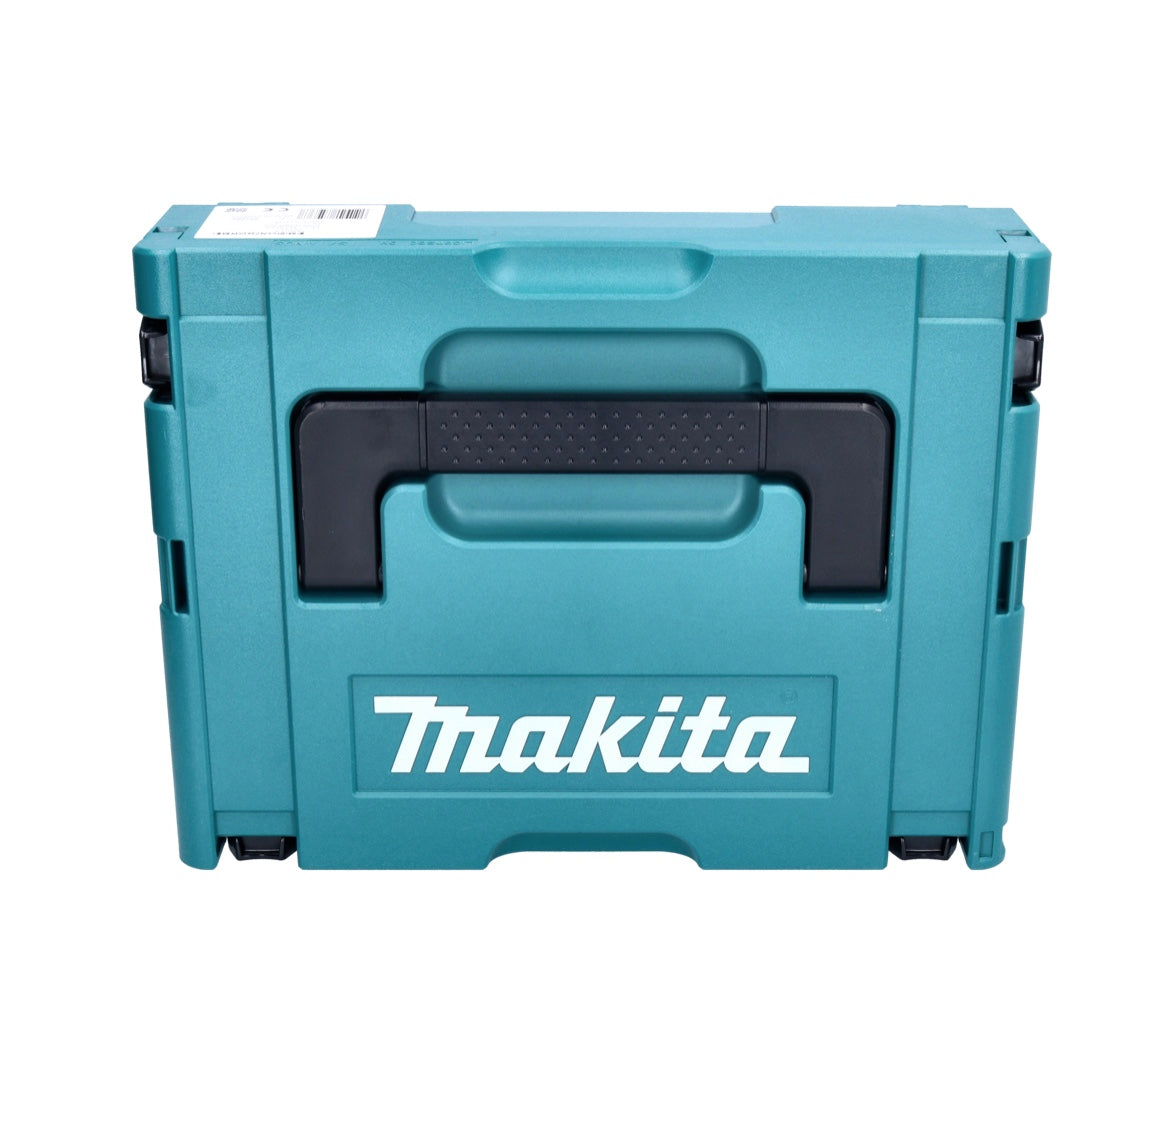 Makita FS 6300 RJX2 Schnellbauschrauber Magazinvorsatz 570 Koffe + + Toolbrothers – W